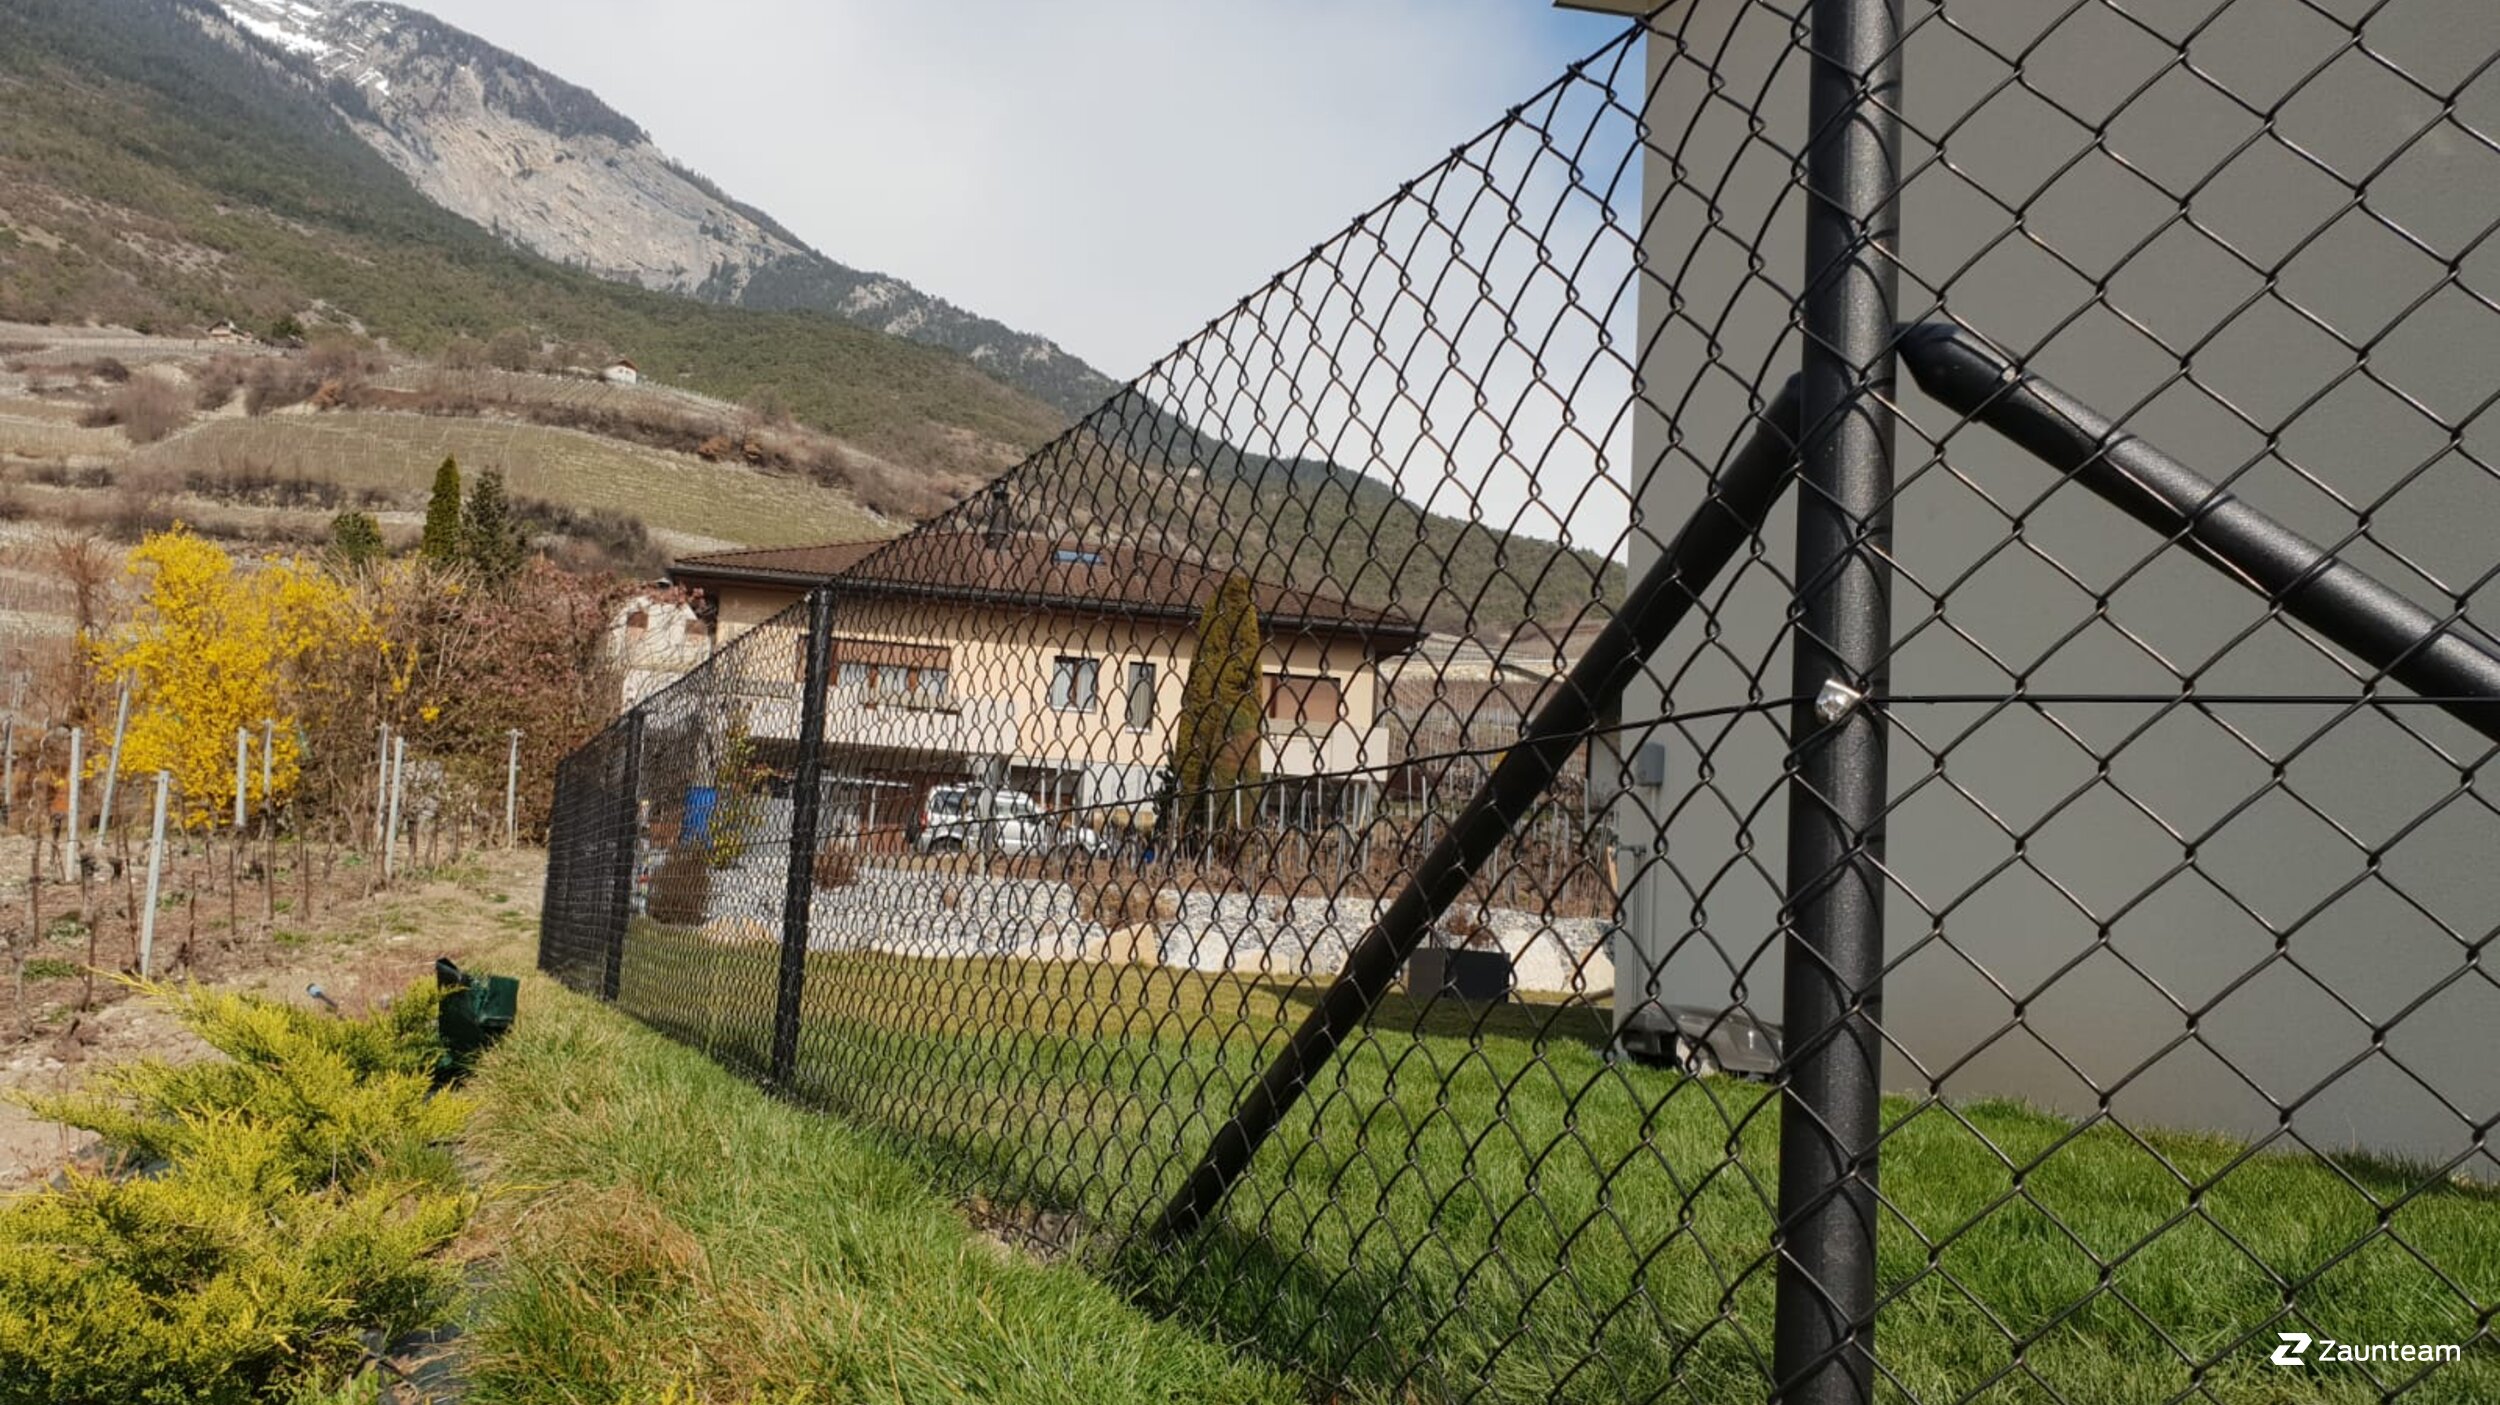 Grillage diagonal de 2019 à 3970 Salgesch Suisse de Zaunteam Wallis / Swissclôture Valais.